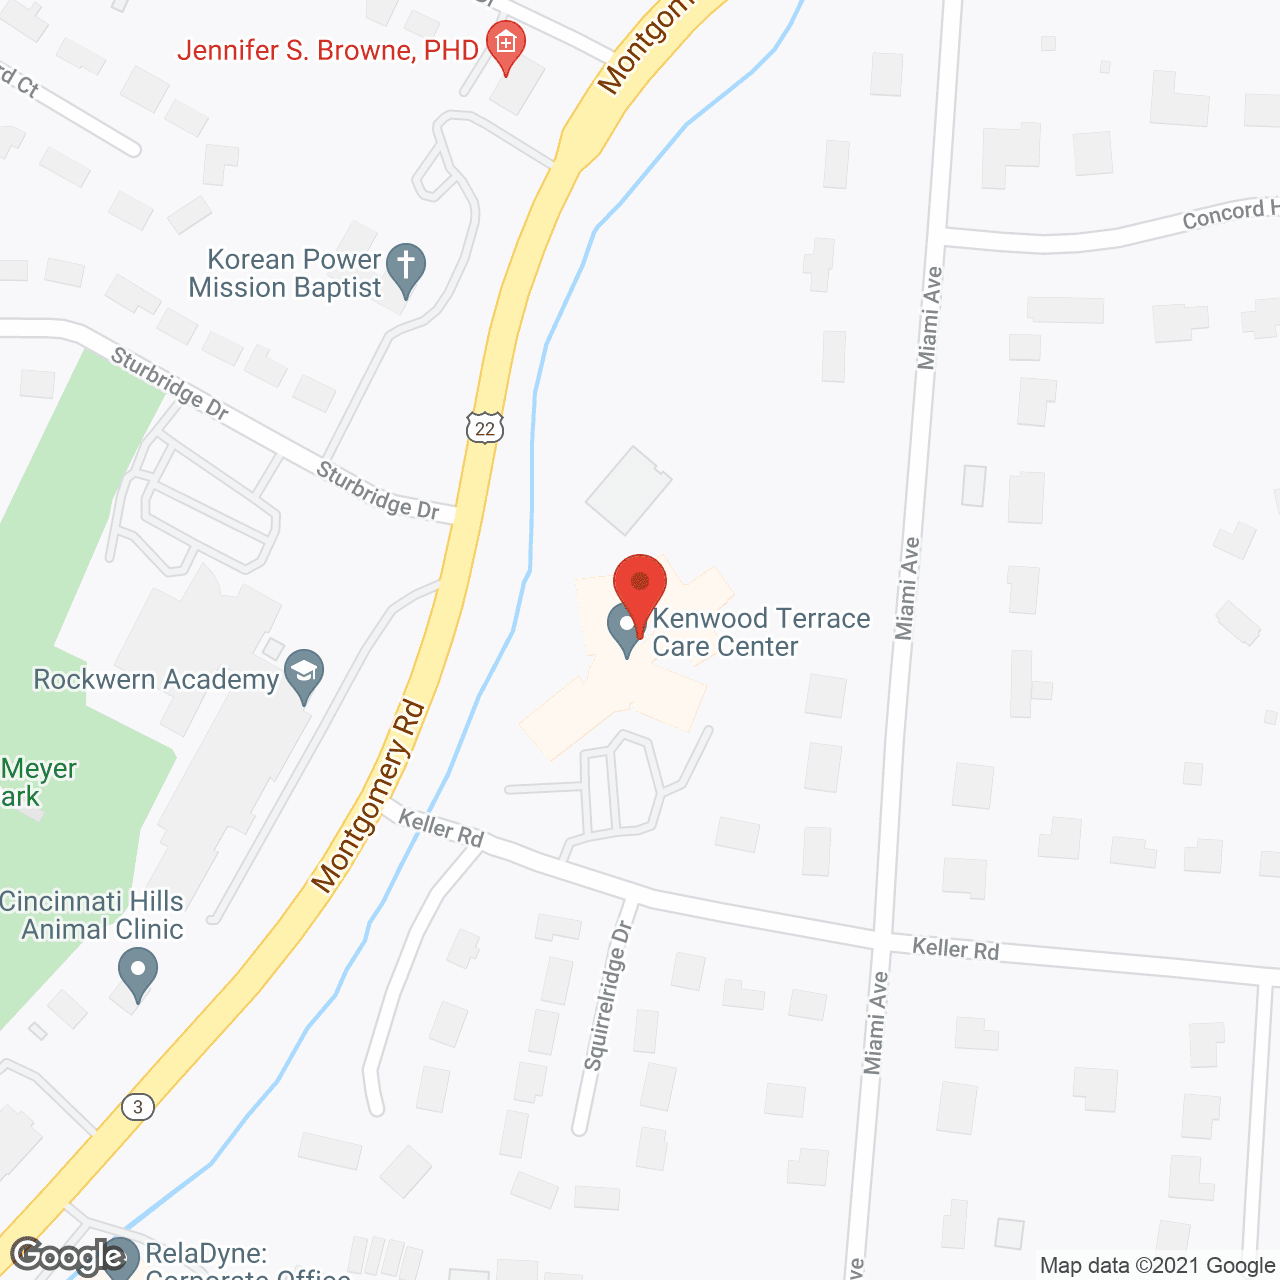 Kenwood Terrace Care Center in google map